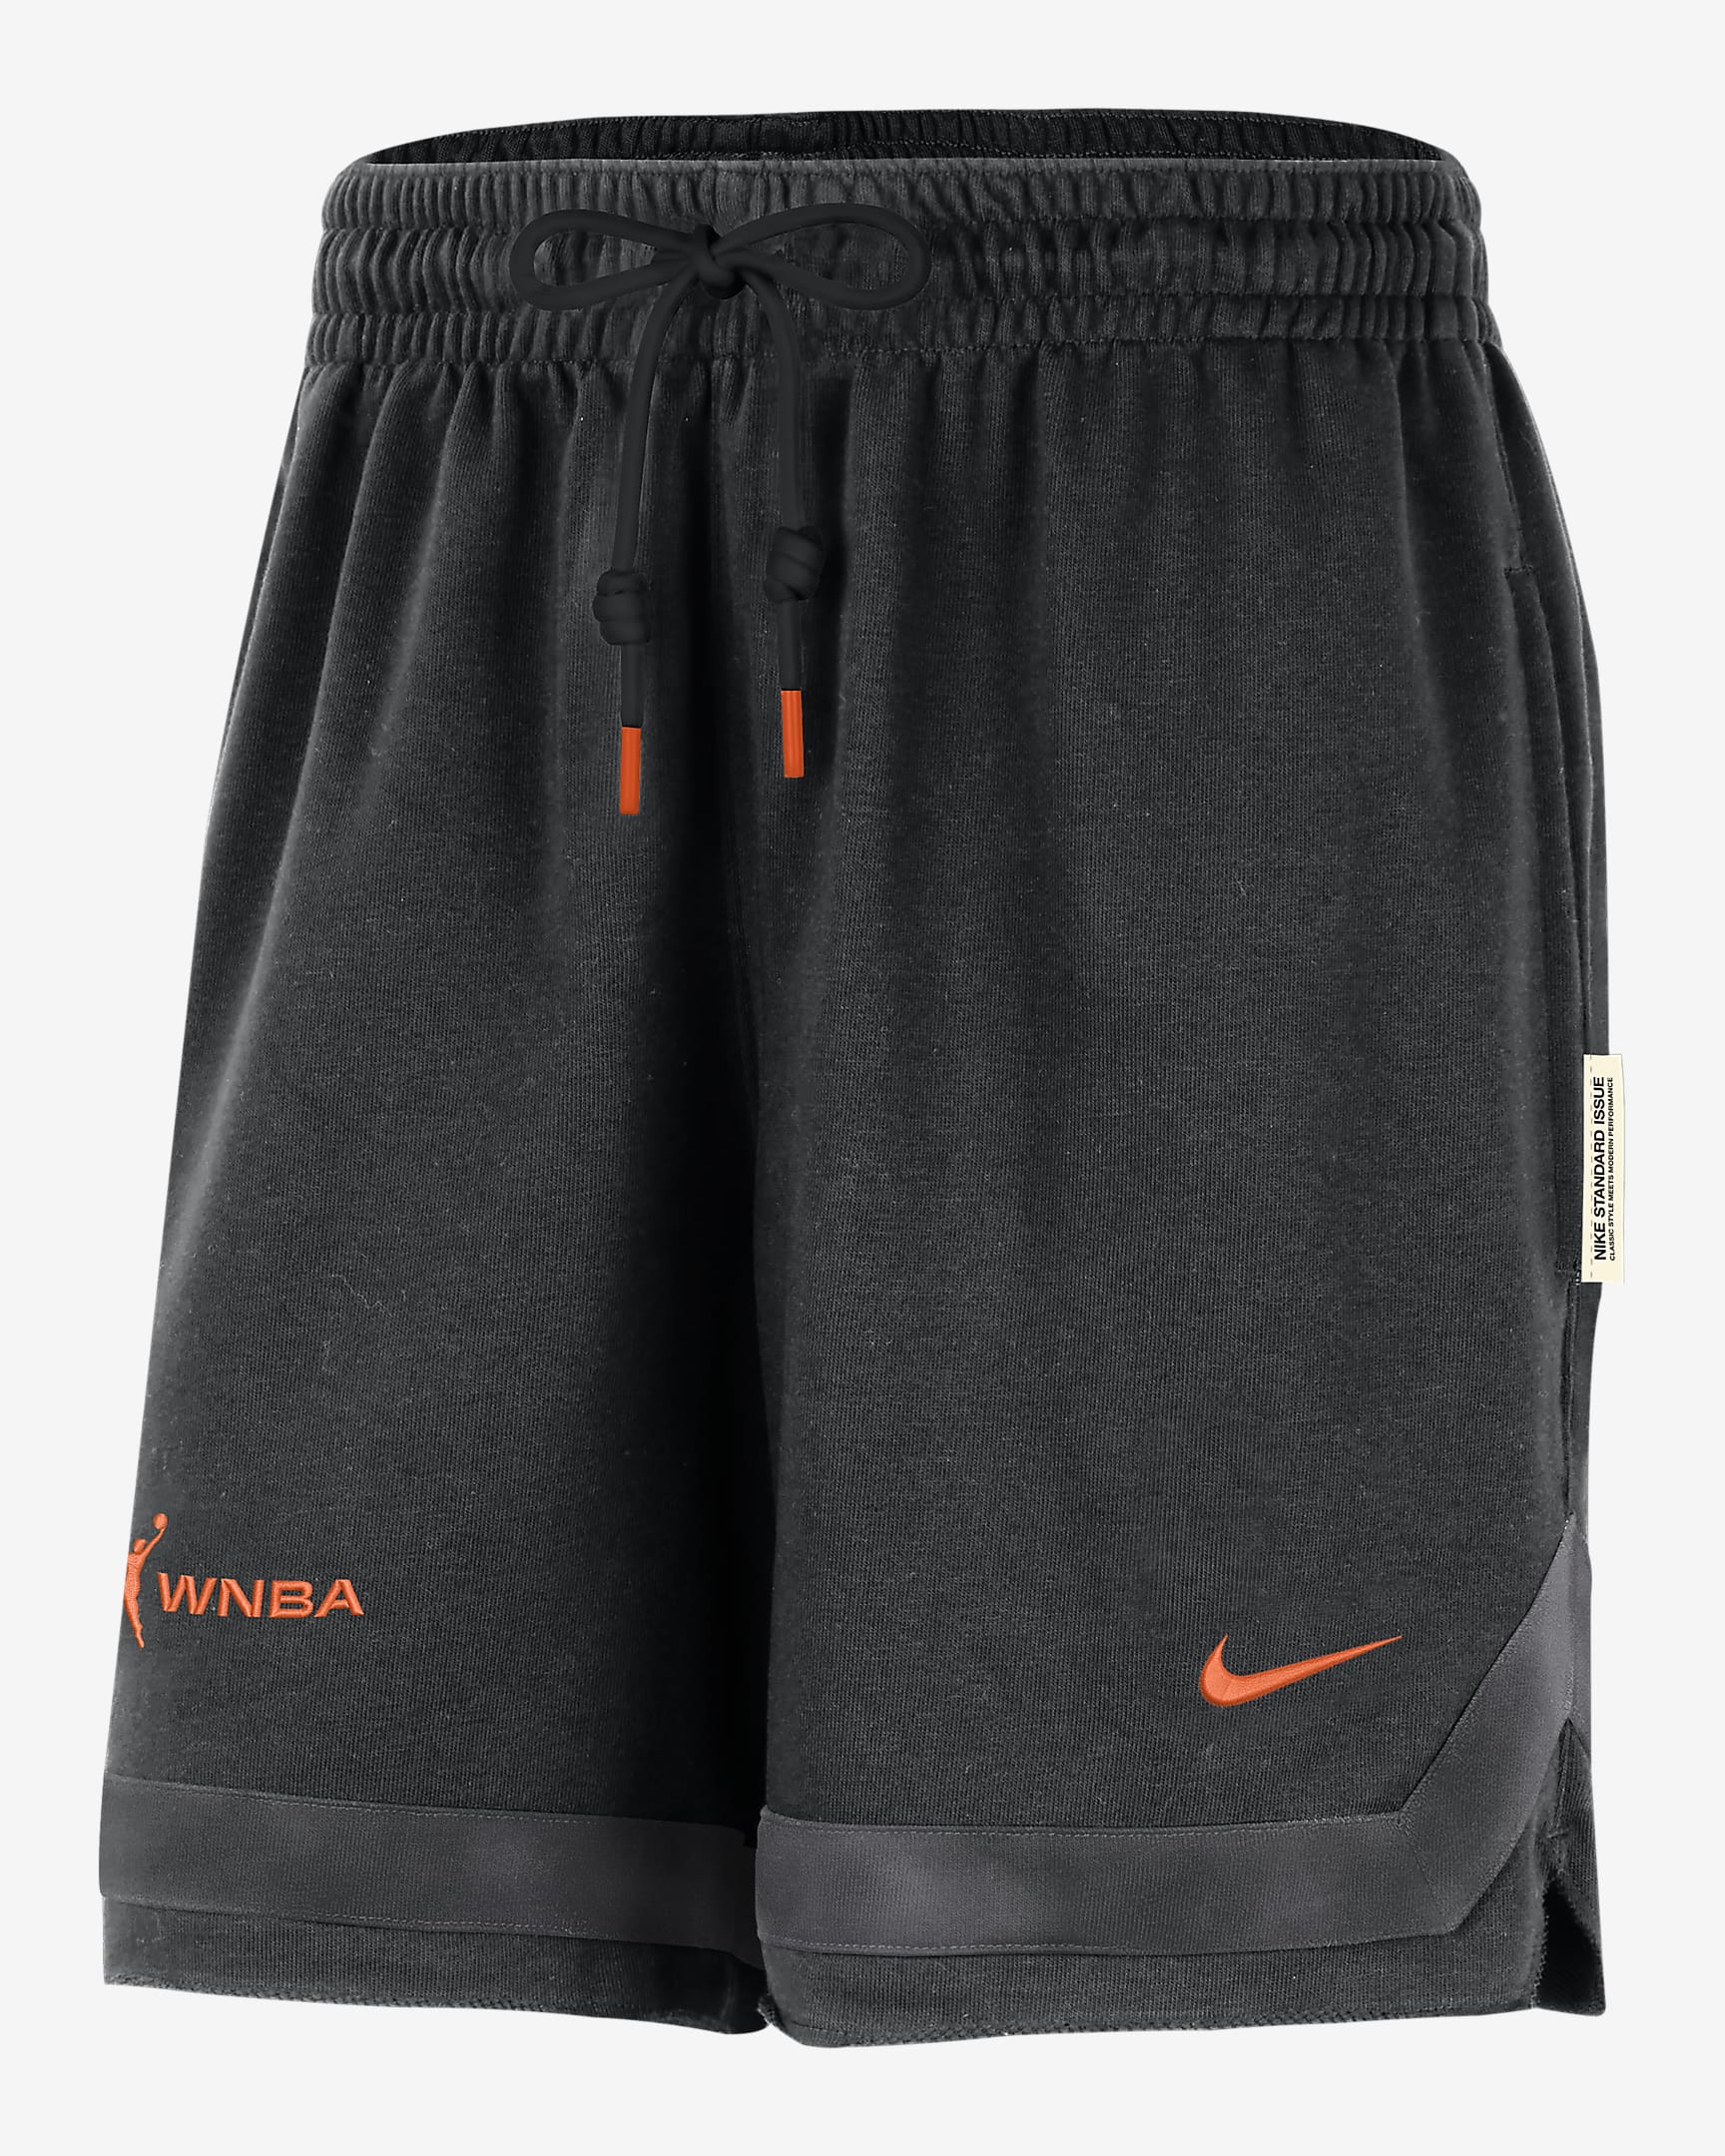 Team 13 Standard Issue Women's Nike WNBA Shorts. Nike RO